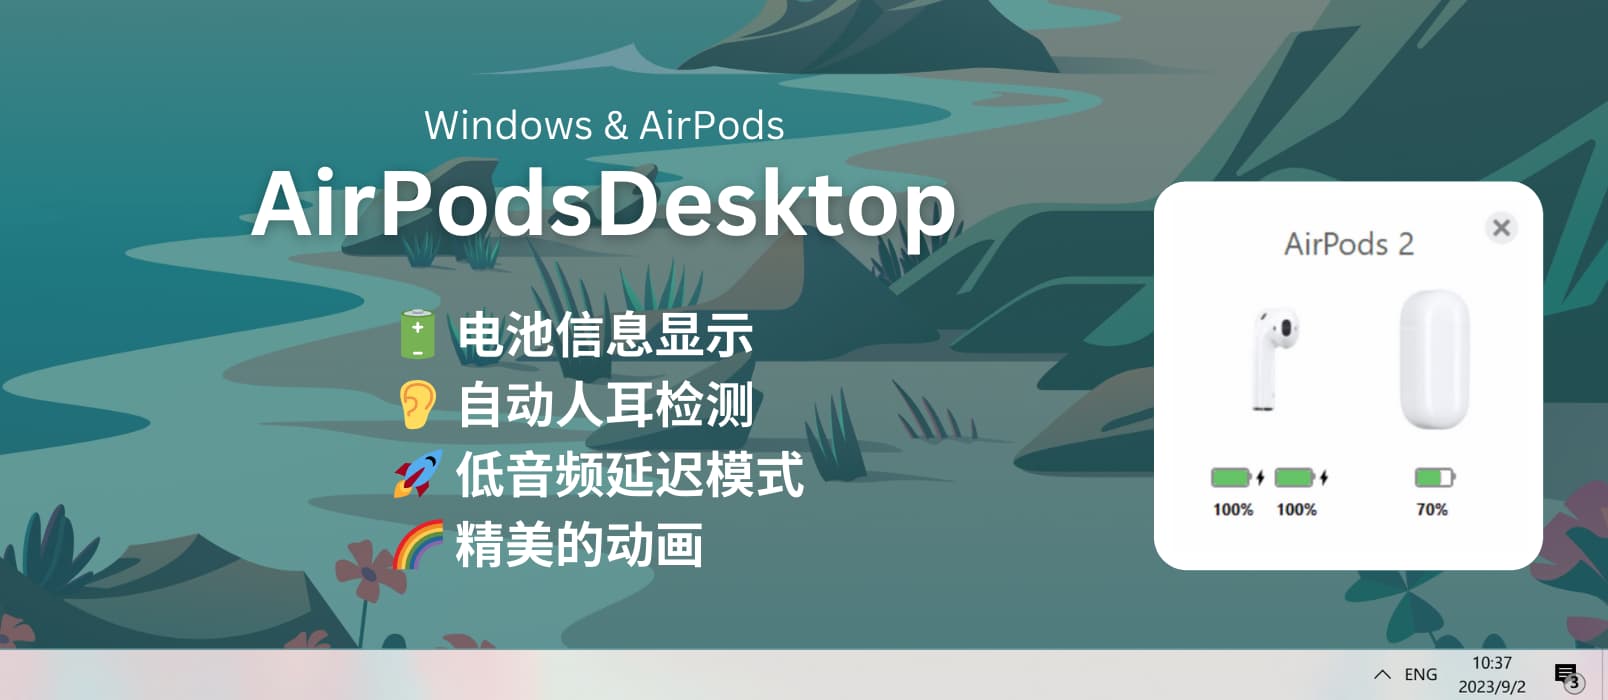 AirPodsDesktop – 开源 AirPods 增强：在 Windows 上动画显示电池信息、入耳检测、低音频延迟